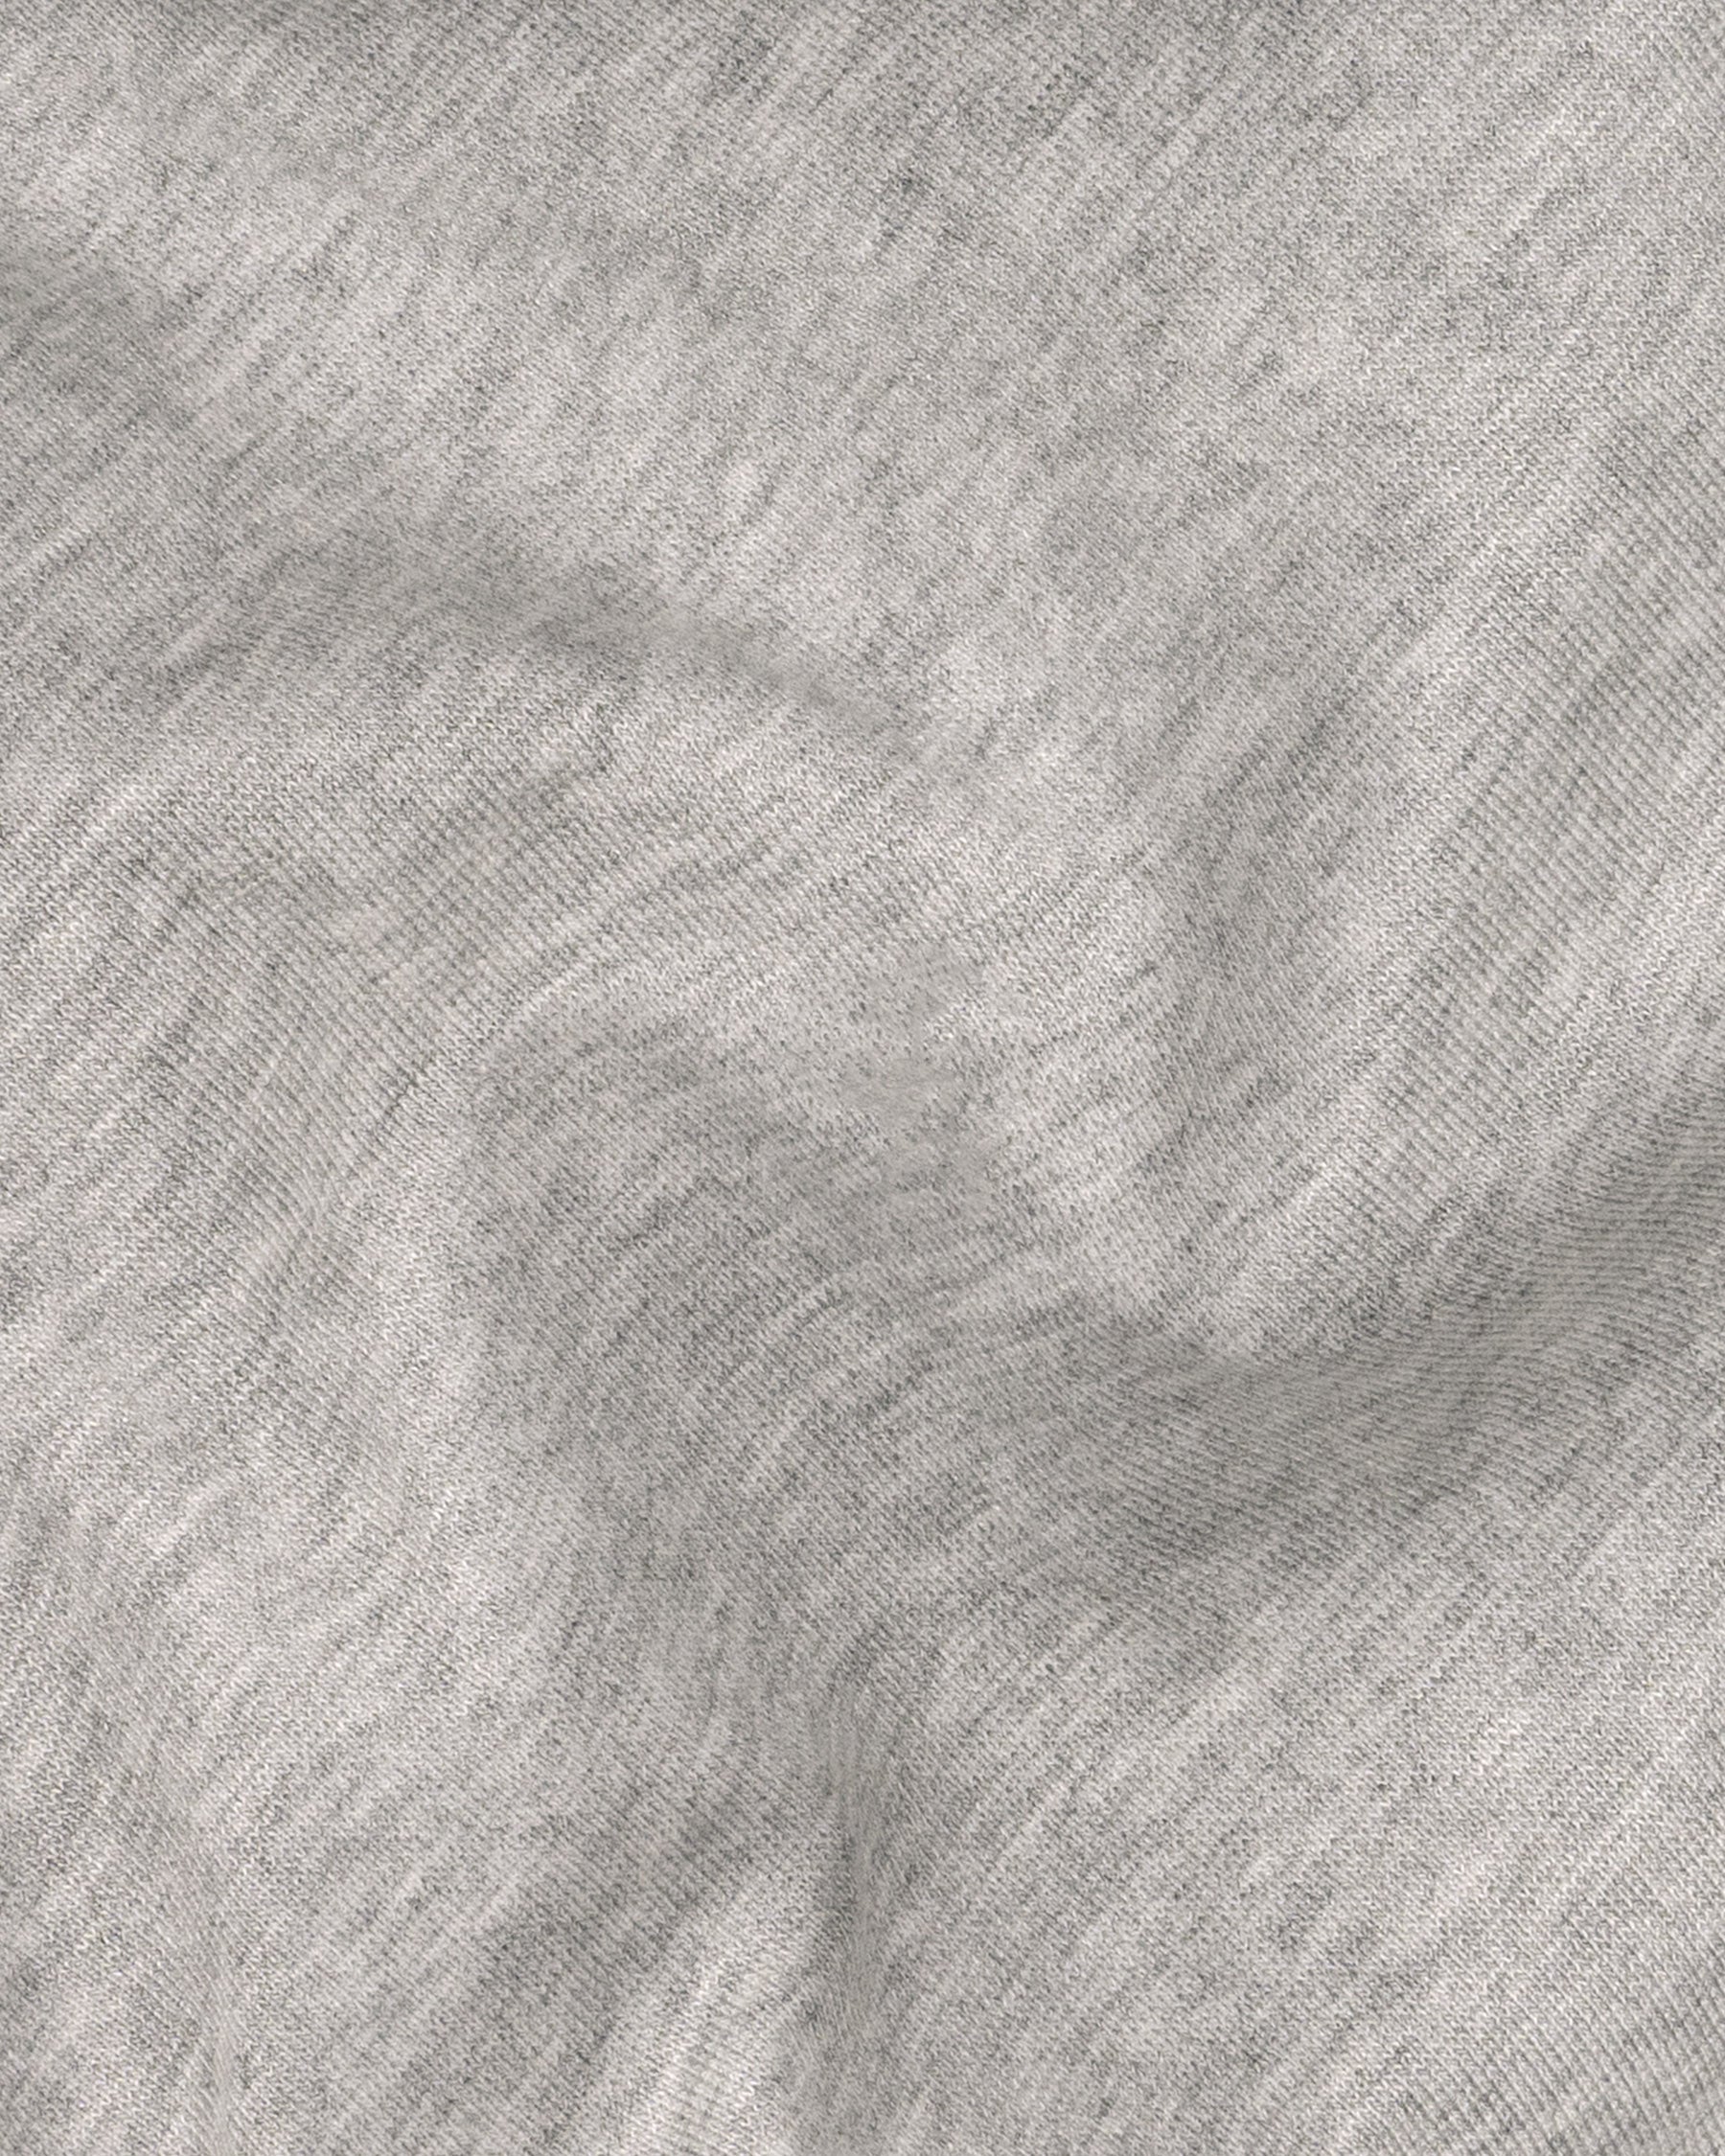 Nobel Grey Full Sleeve Super Soft Premium Cotton Sweatshirt TS482-S, TS482-M, TS482-L, TS482-XL, TS482-XXL